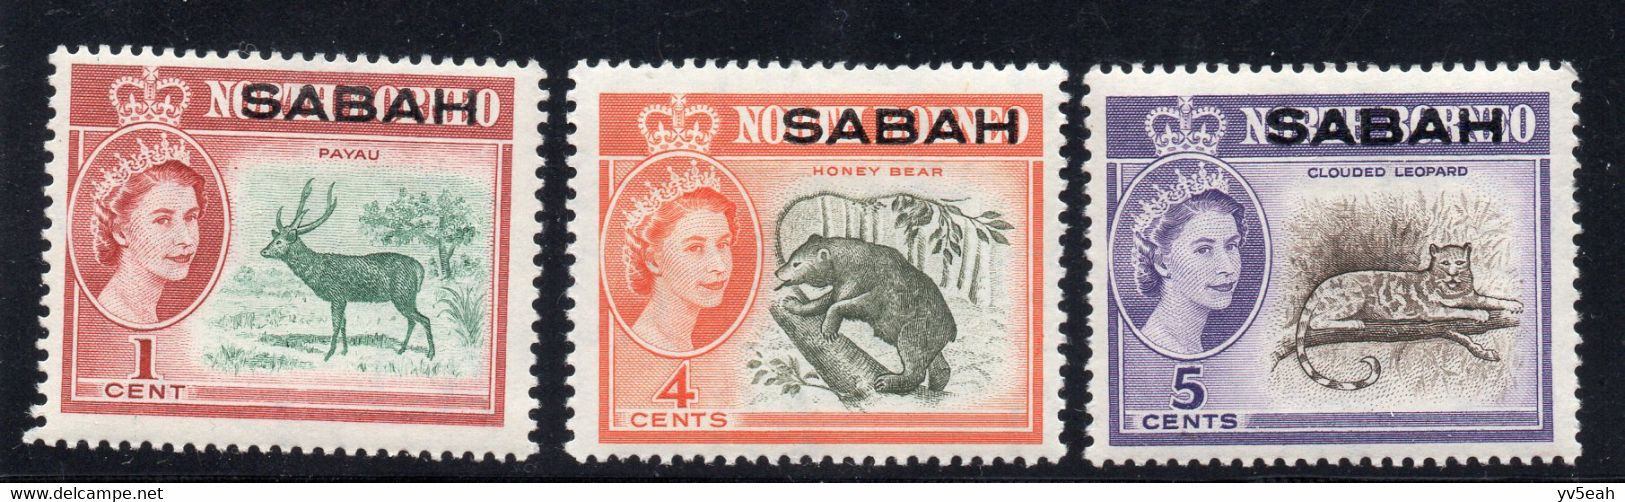 SABAH/1964/MH/SC#1-3/NORTH BORNEO OVERPRINTED / QEII / MALASYA - Sabah